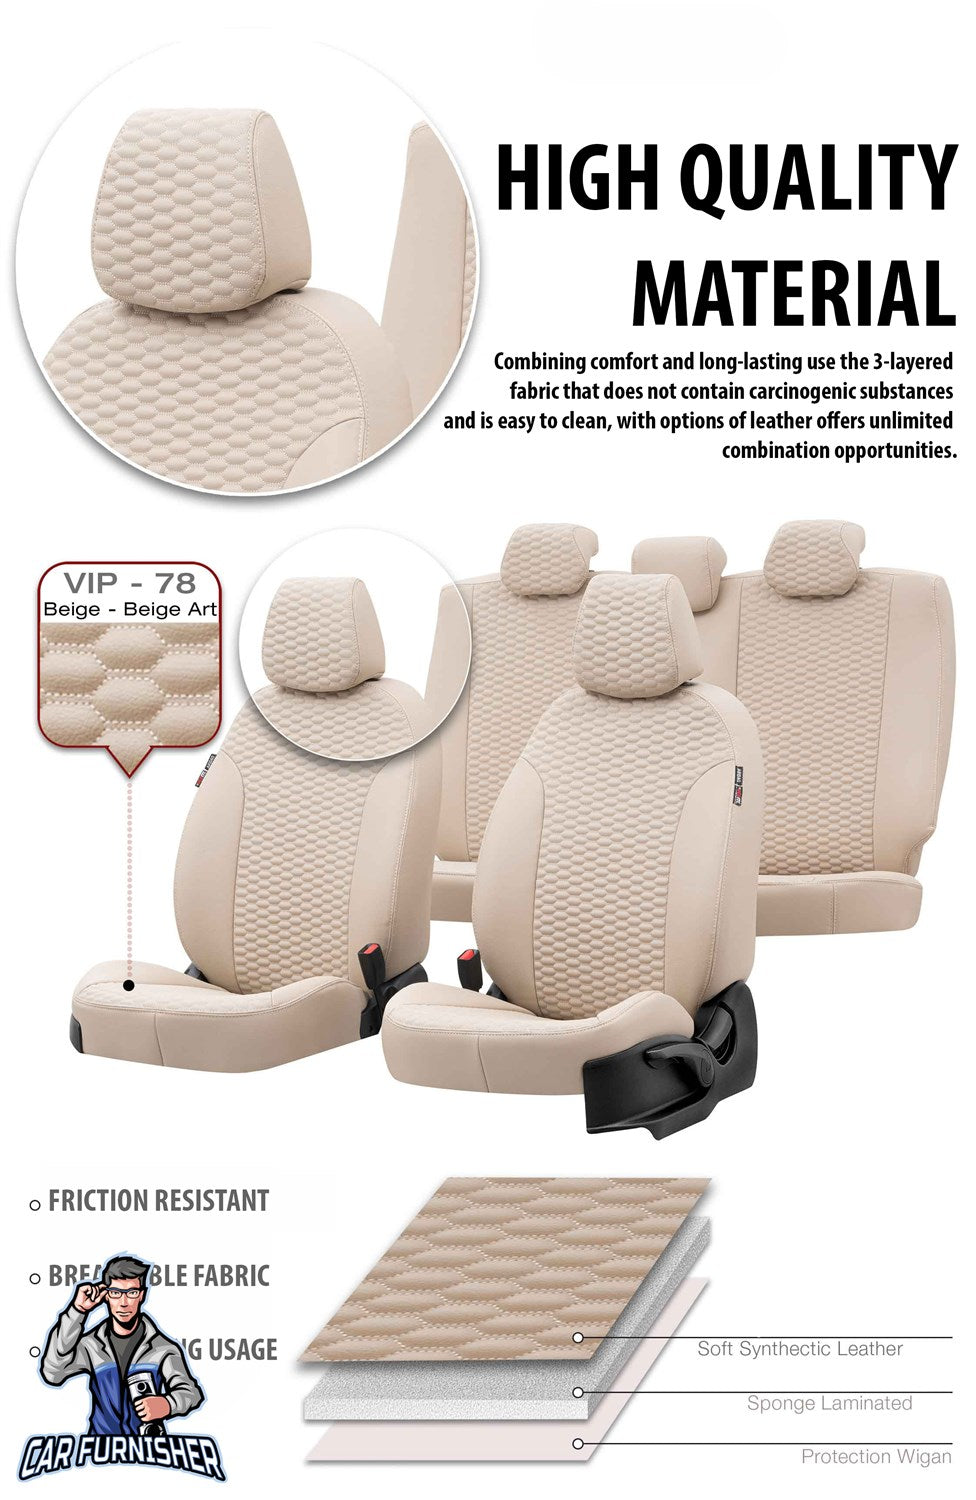 Nissan Almera Car Seat Covers 1995-2008 Tokyo Design Beige Full Set (5 Seats + Handrest) Full Leather